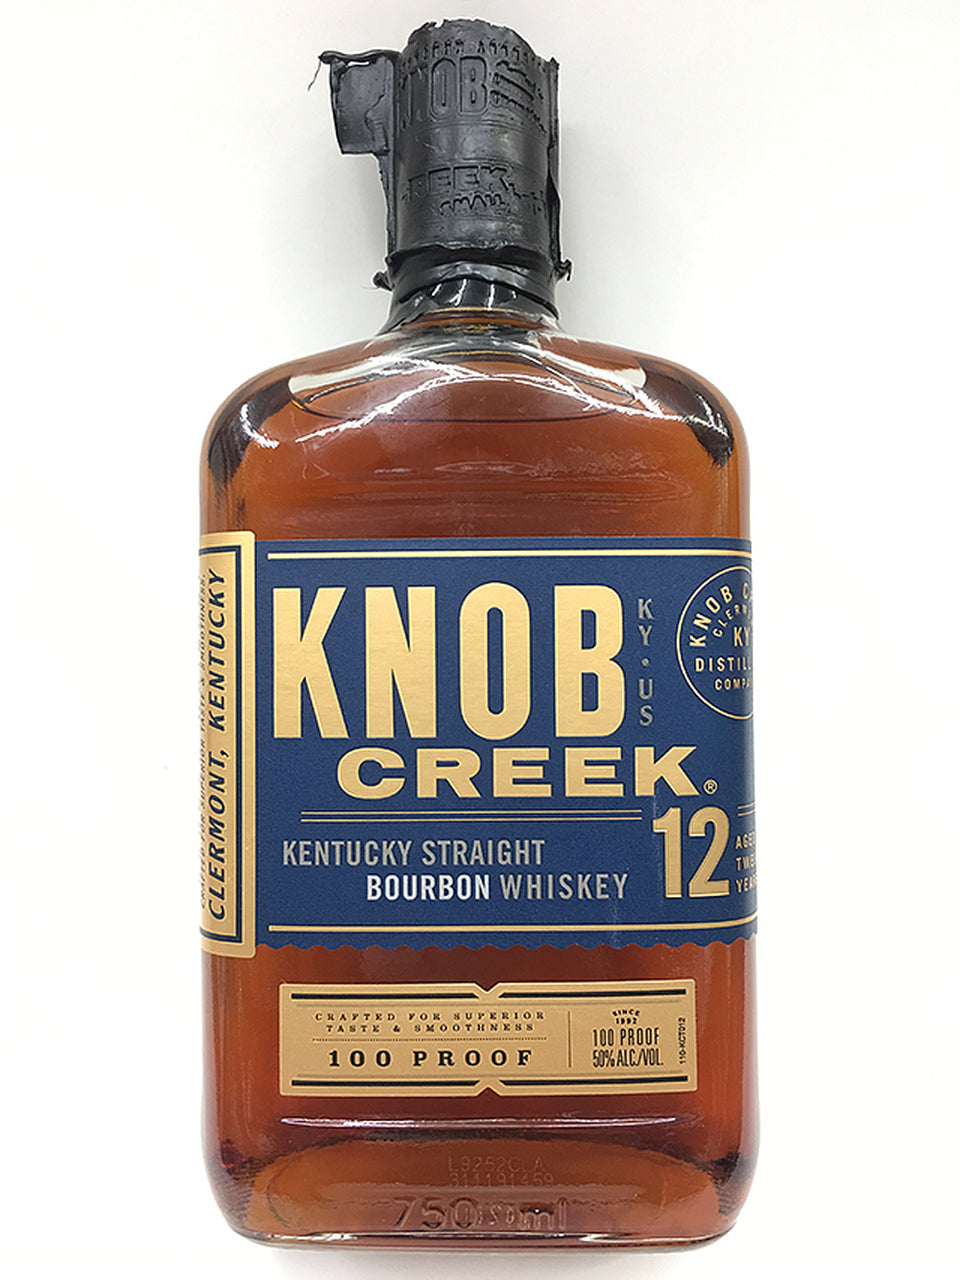 [BUY] Knob Creek 12 Year Old Straight Bourbon Whiskey at